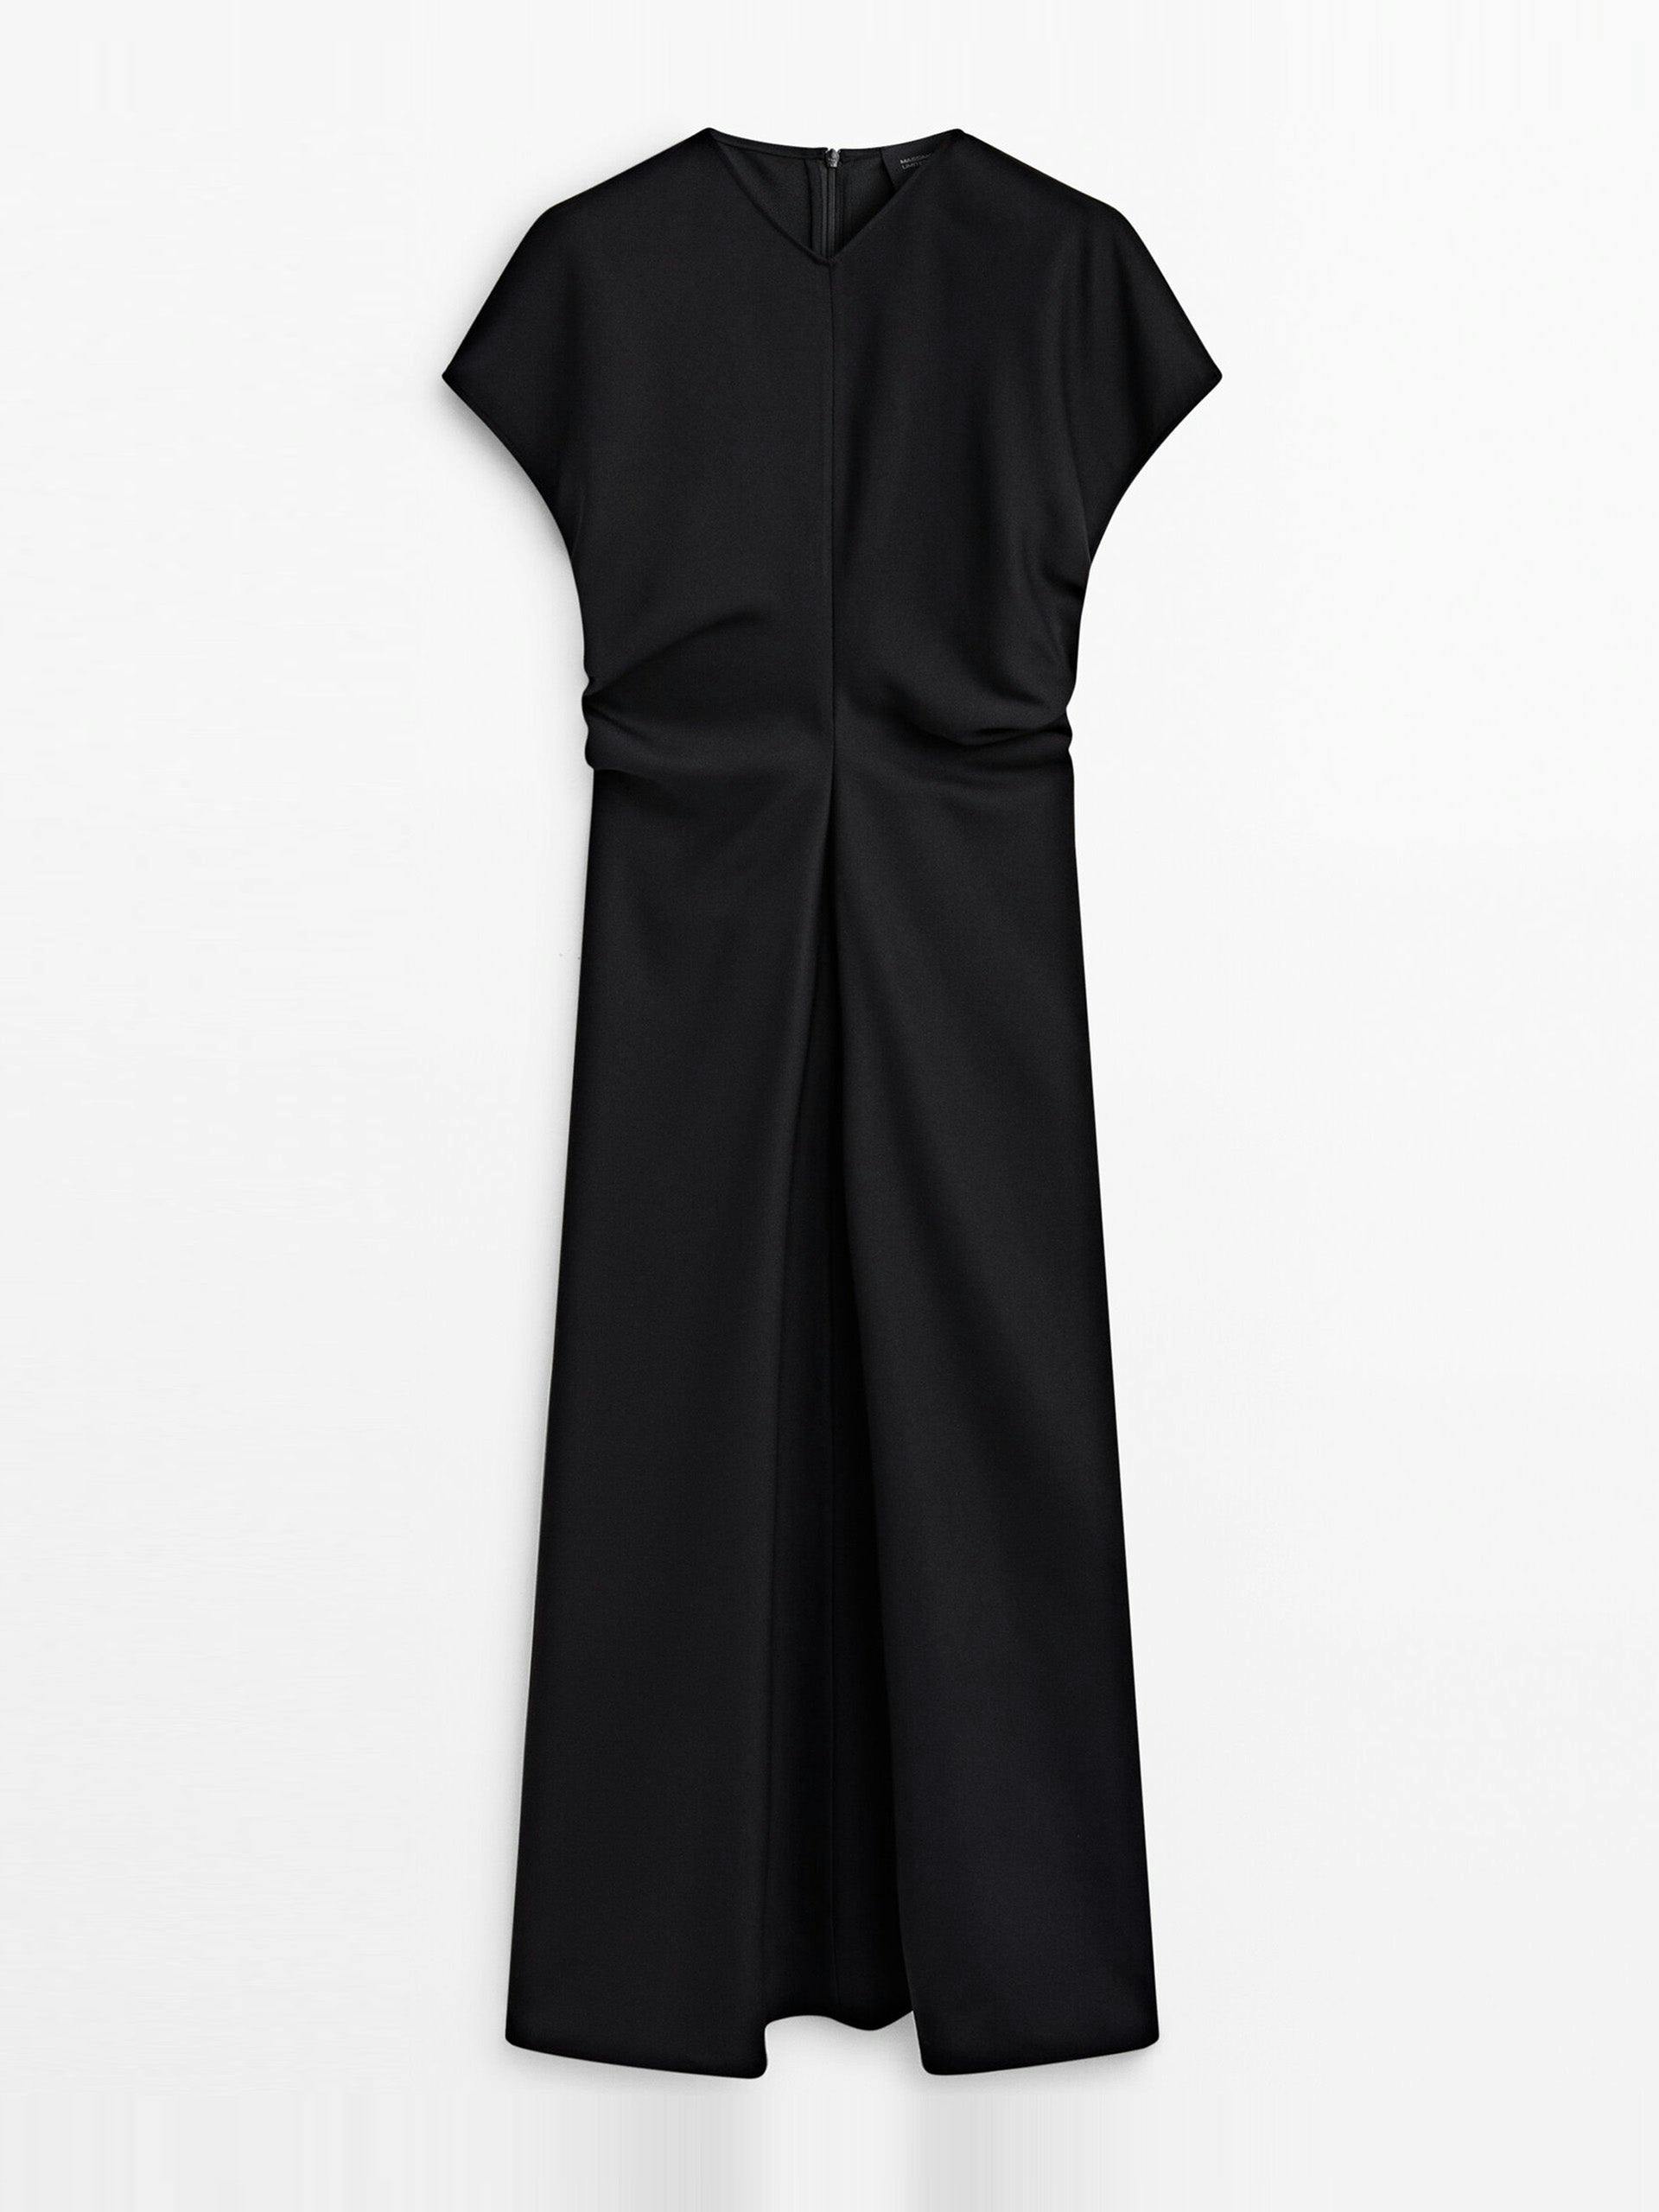 Long black v-neck dress